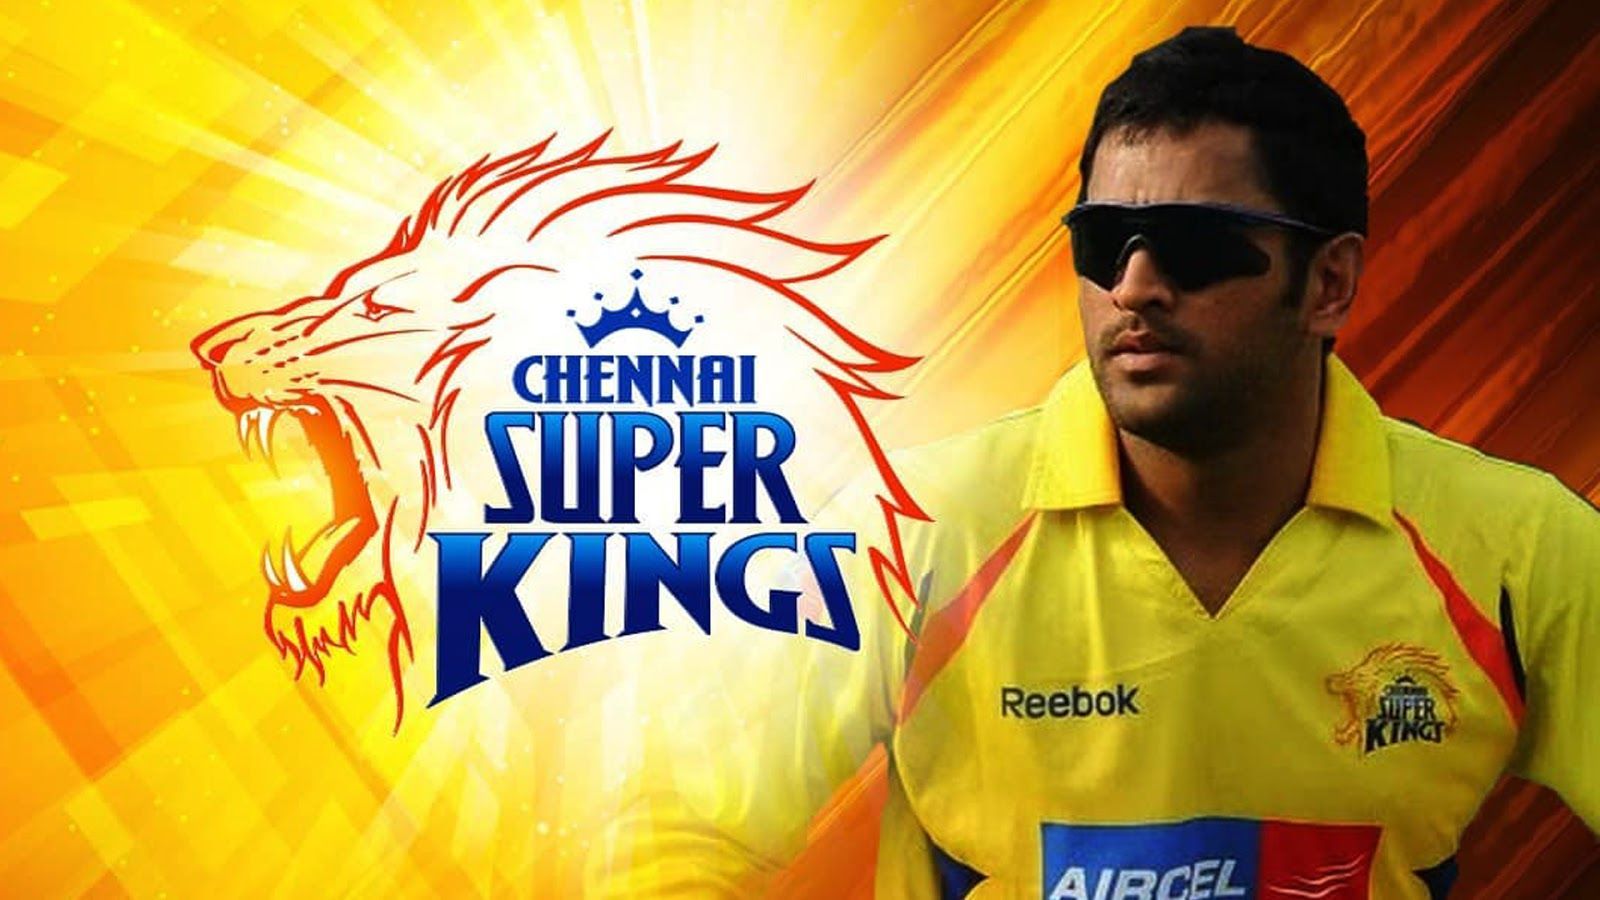 Chennai Super Kings HD Wallpaper Download Free 1080p. Chennai super kings, Chennai, Ms dhoni wallpaper